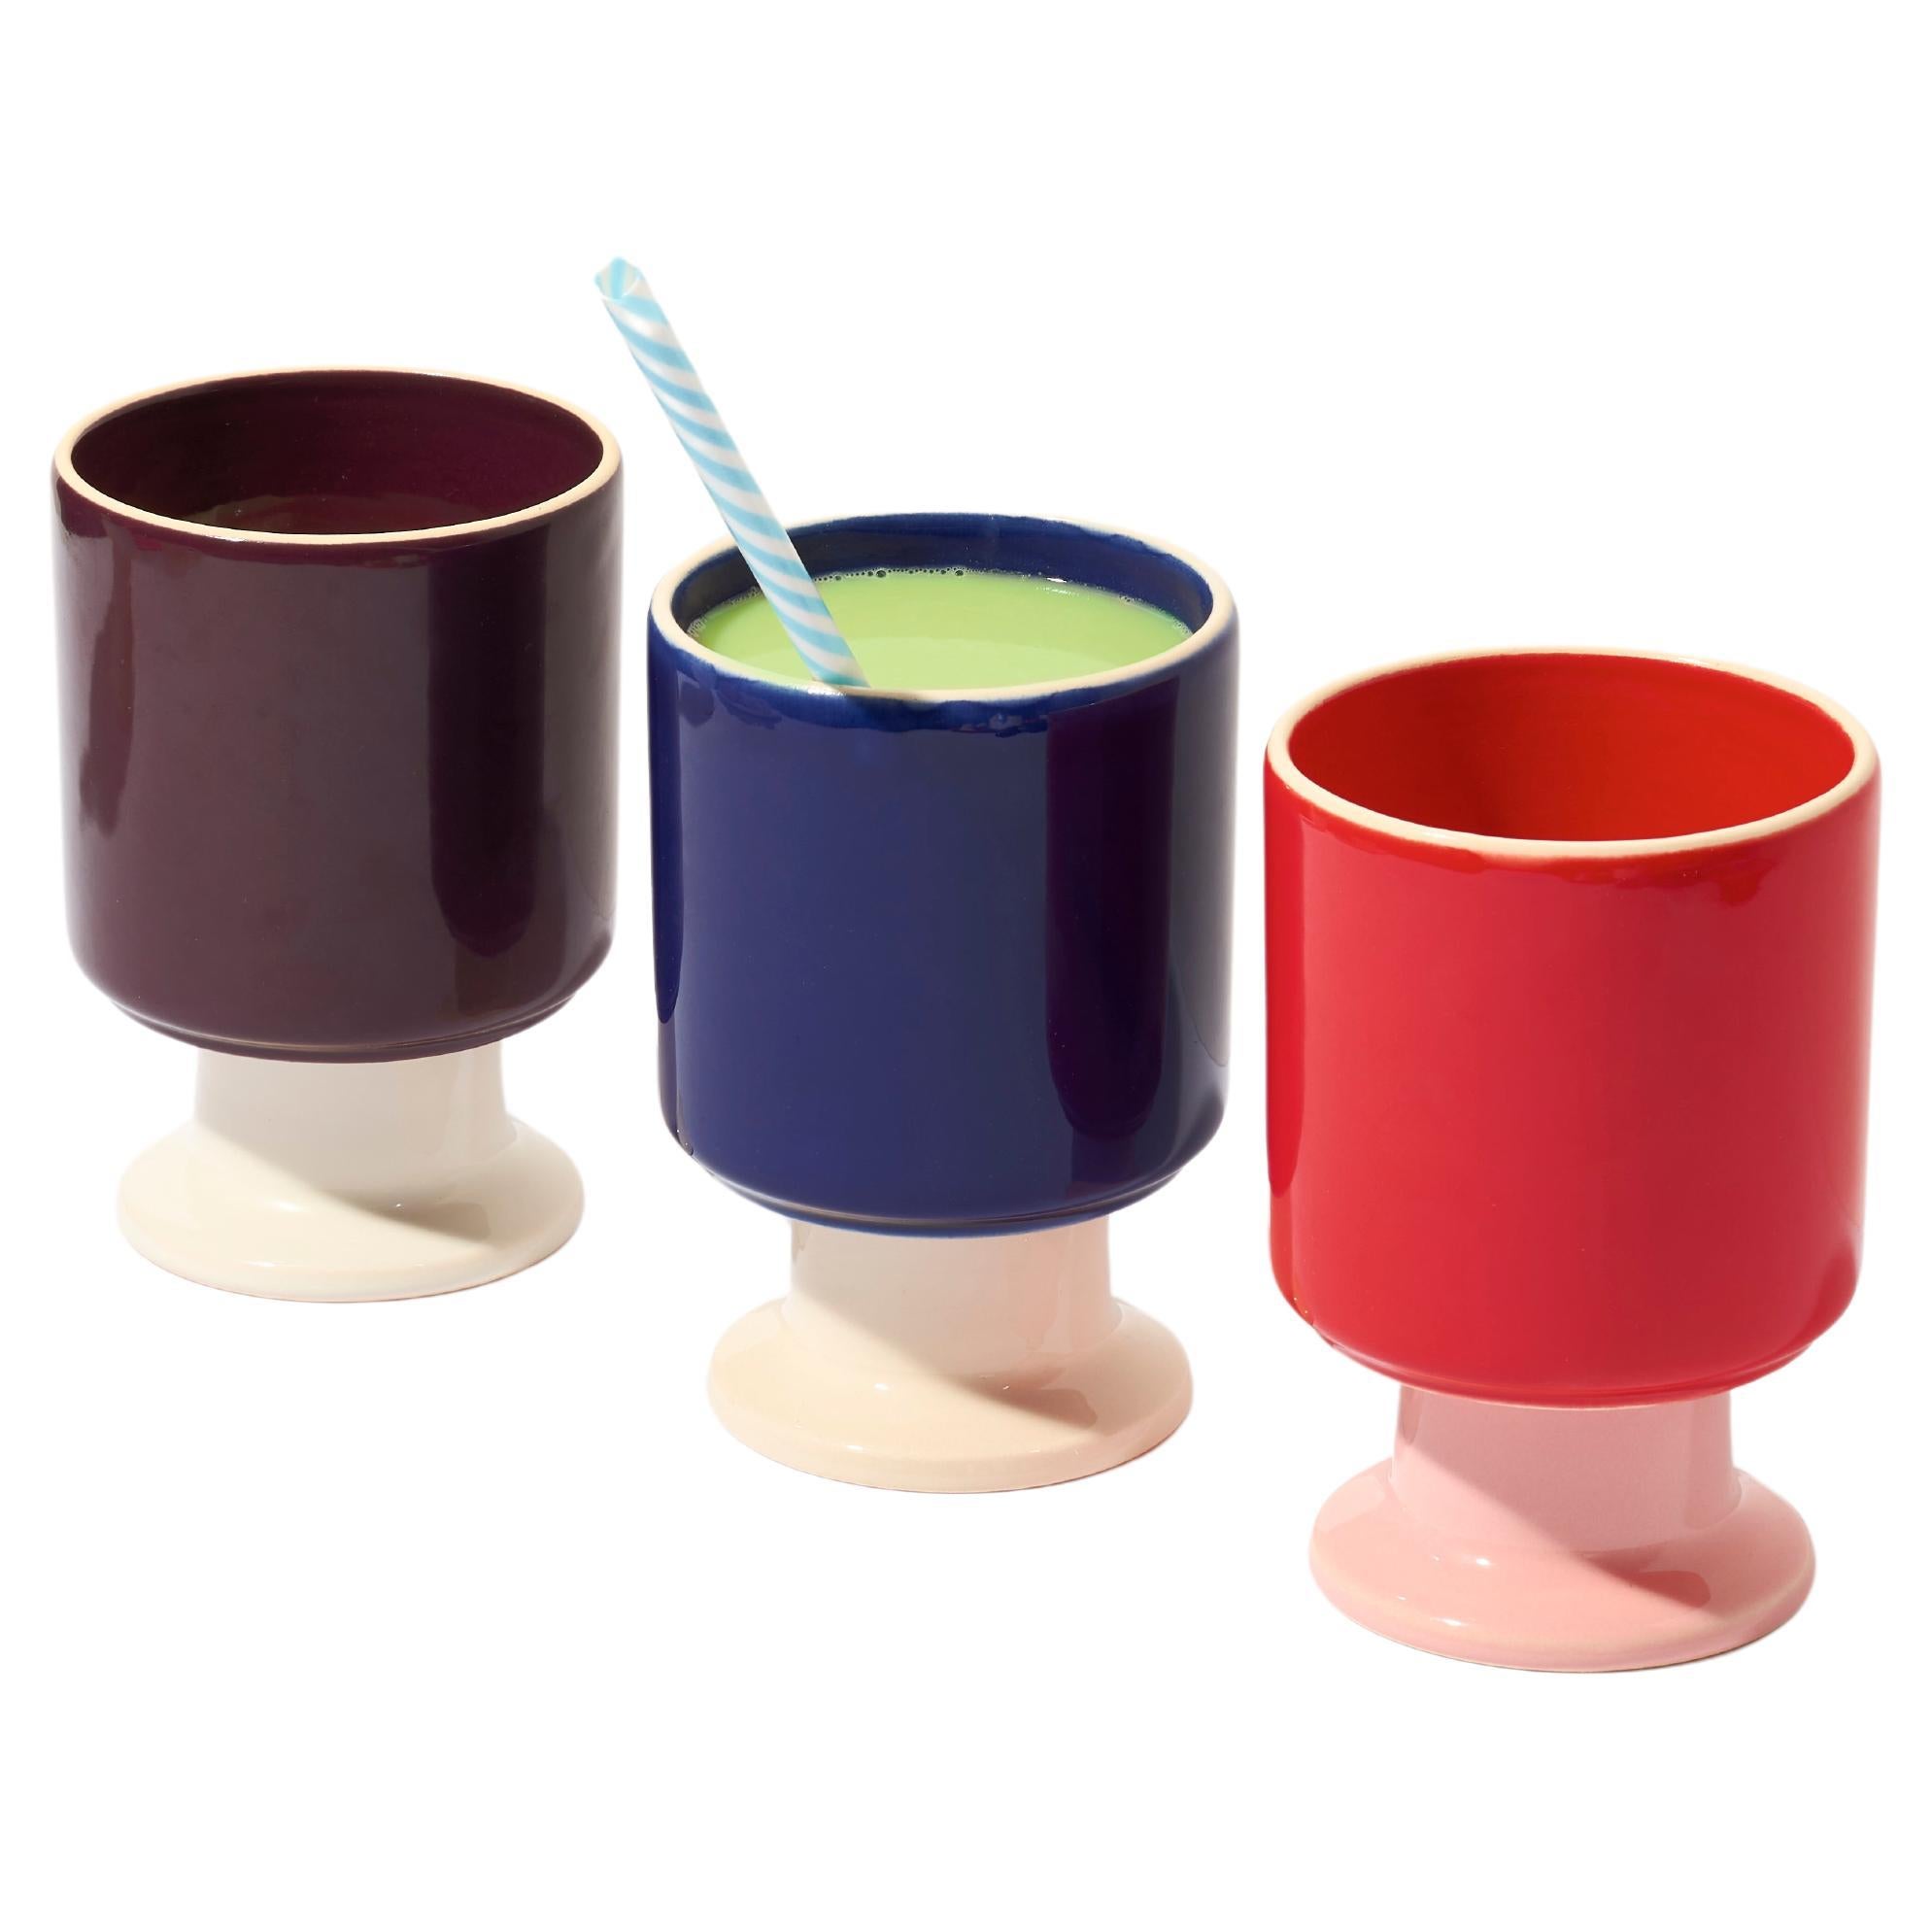 WIT Mug set of 3 / Kobalt / Red / Plum by Malwina Konopacka For Sale